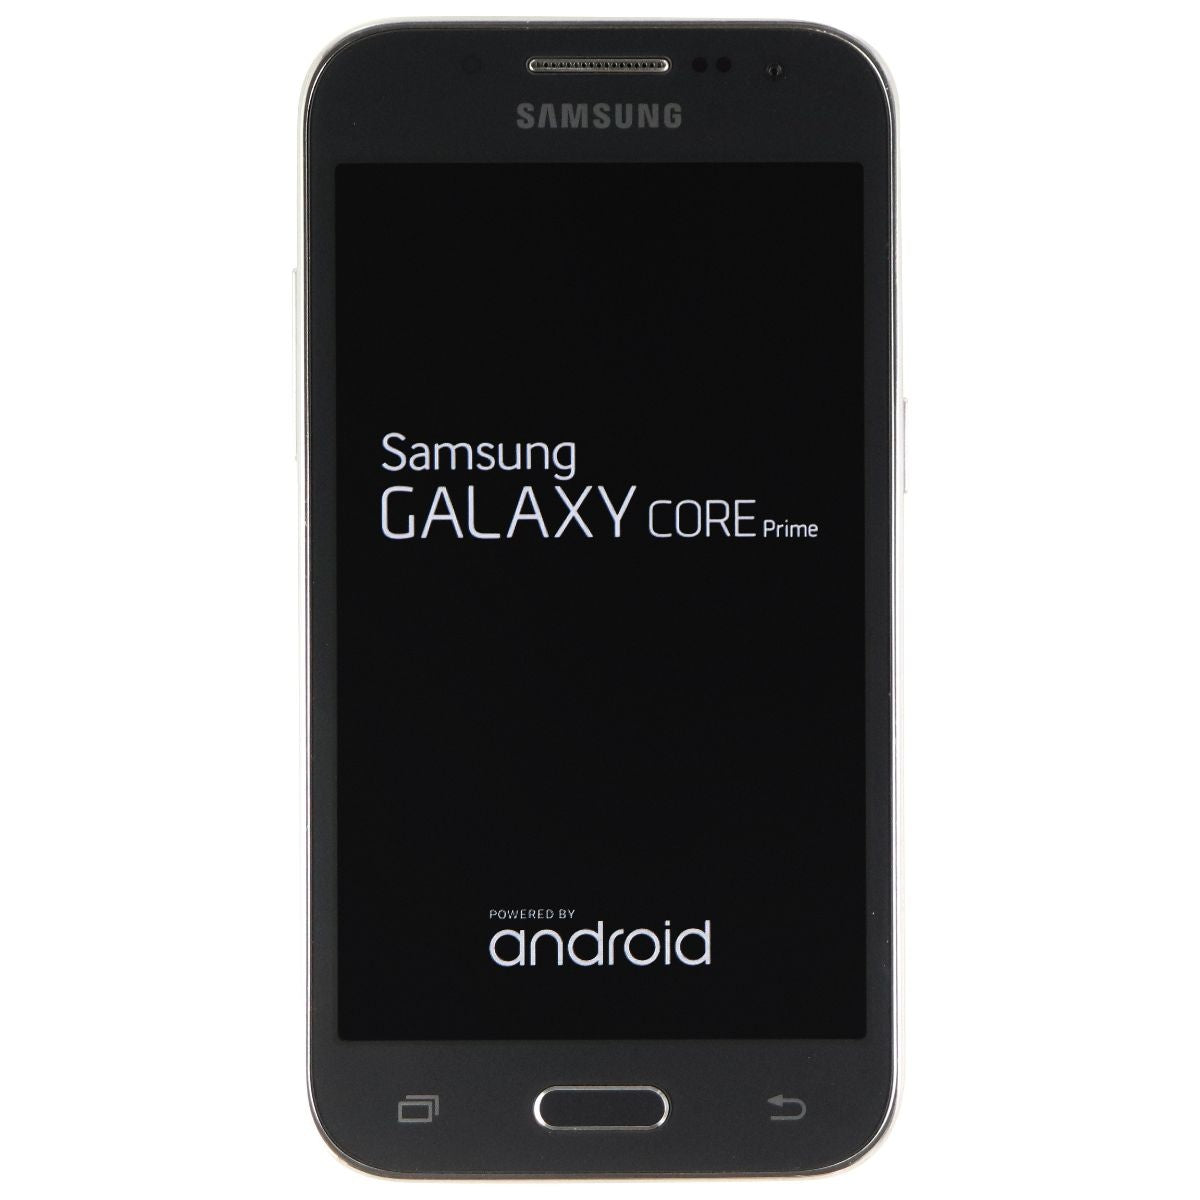 Samsung Galaxy Core Prime (4.5-inch) Smartphone (SM-G360V) Verizon - 8GB/Black Cell Phones & Smartphones Samsung    - Simple Cell Bulk Wholesale Pricing - USA Seller